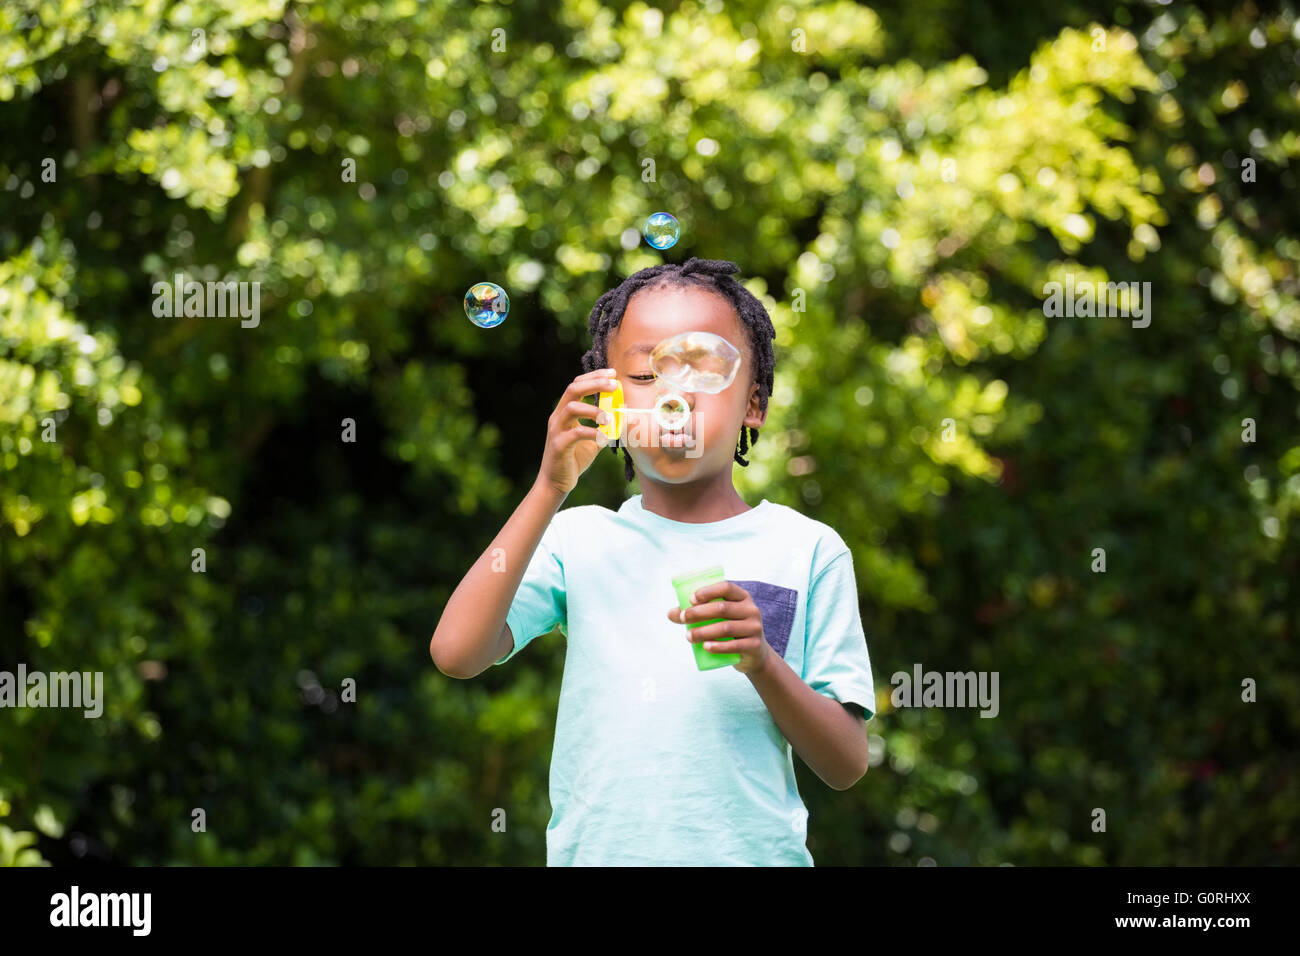 A little boy blowing bubbles Stock Photo